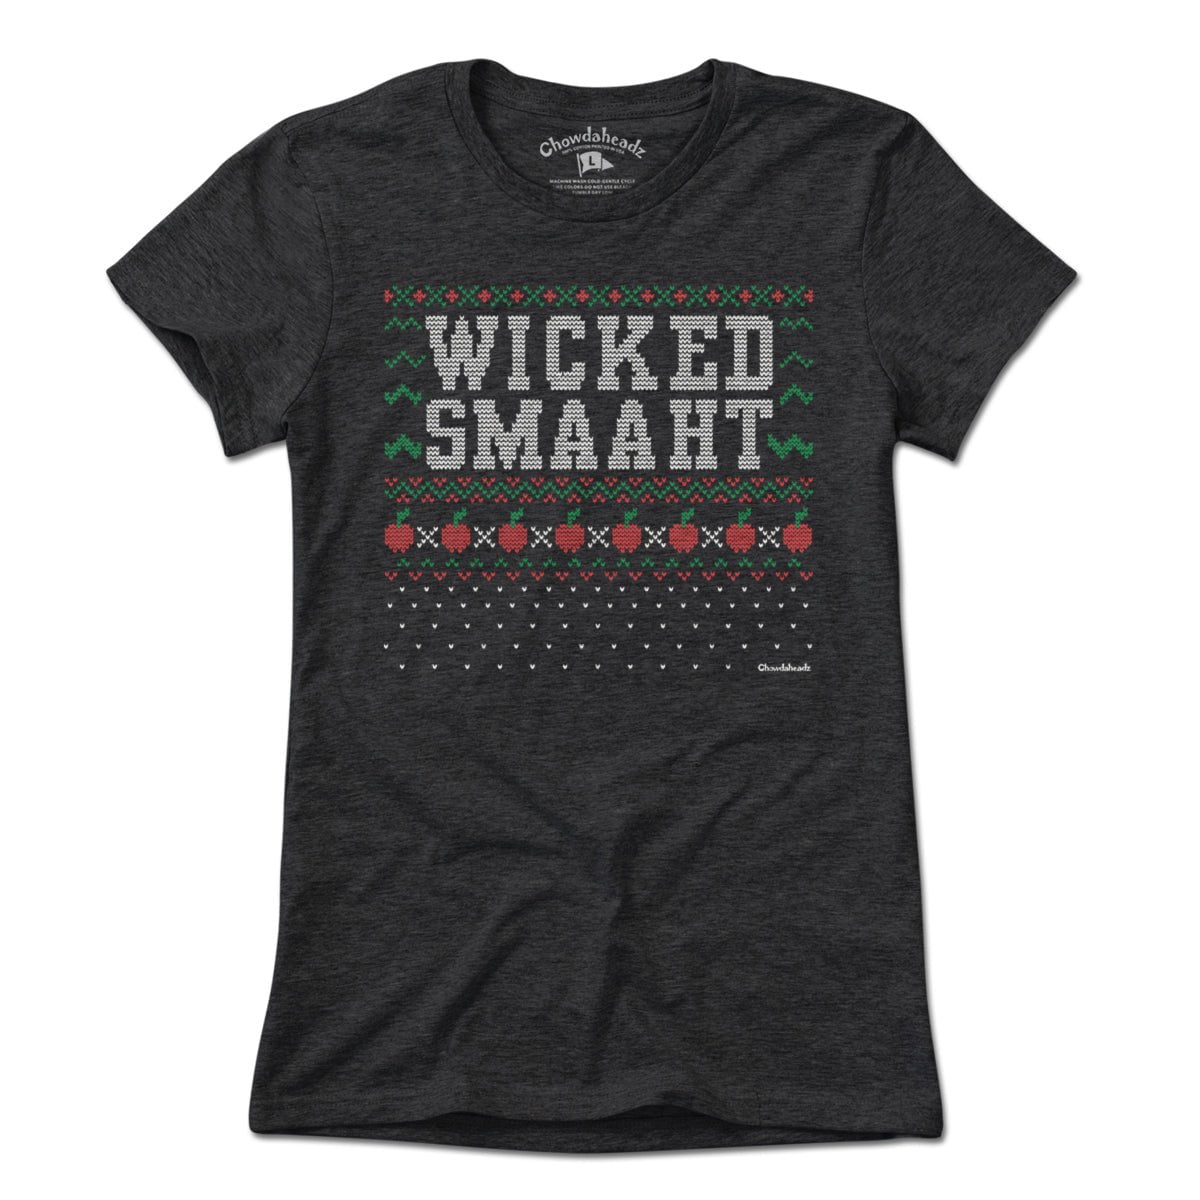 Wicked Smaaht Ugly Holiday Sweater T-Shirt - Chowdaheadz